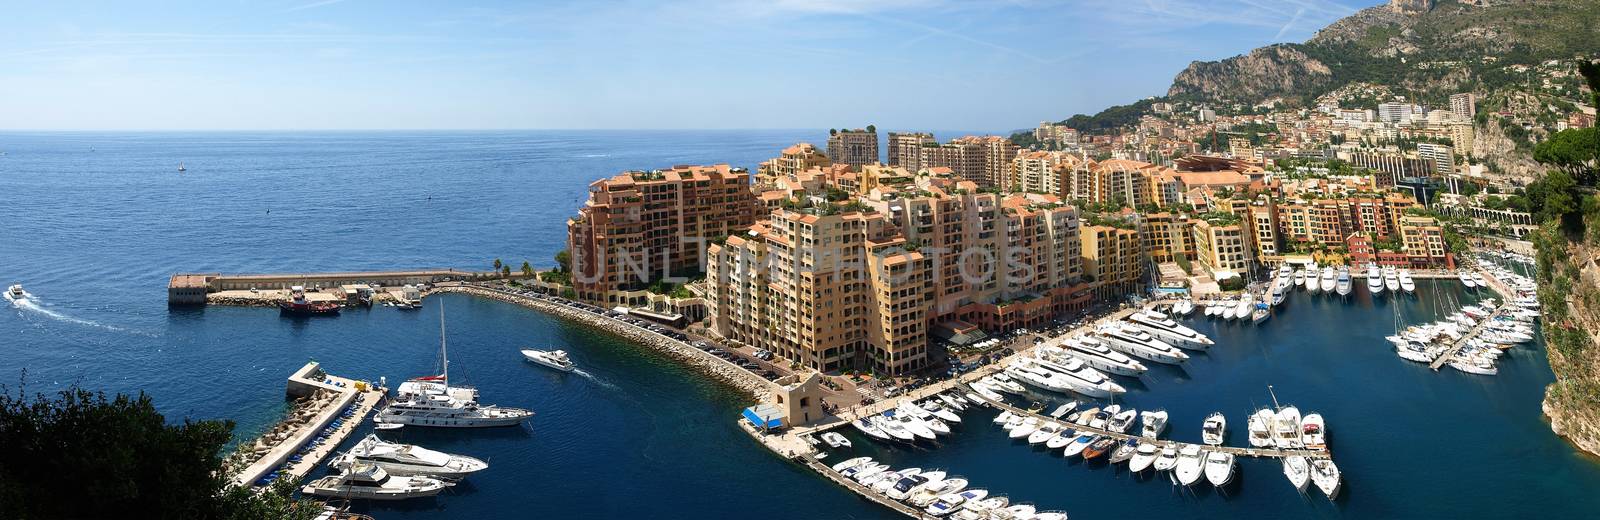 Monte Carlo port - panorama by Venakr